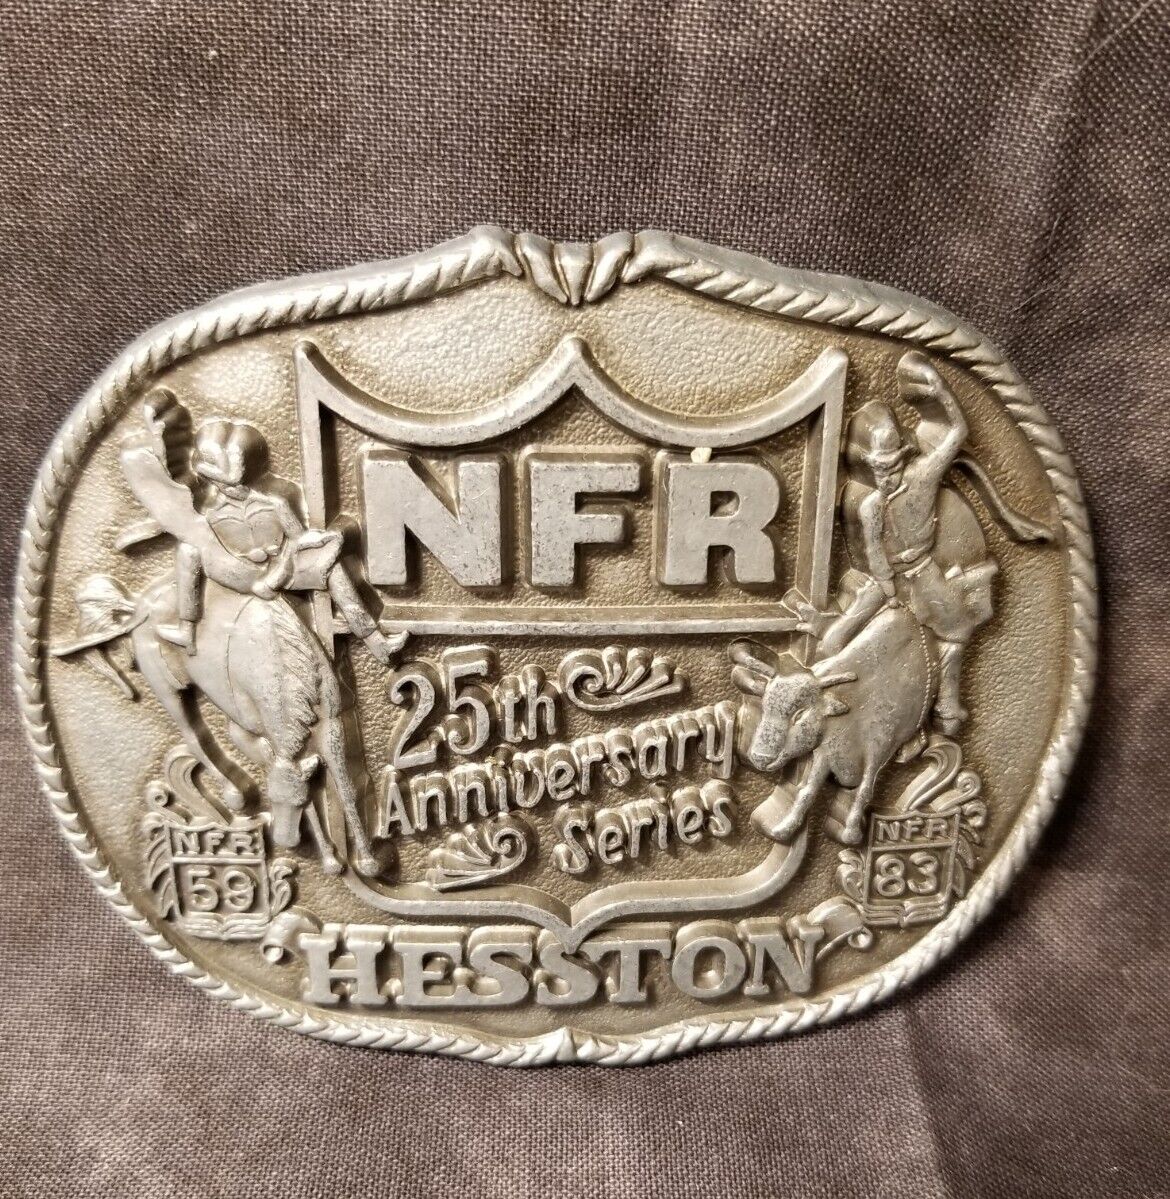 Vintage 1983 Hesston NFR Belt Buckle- 25th Anniversary Series